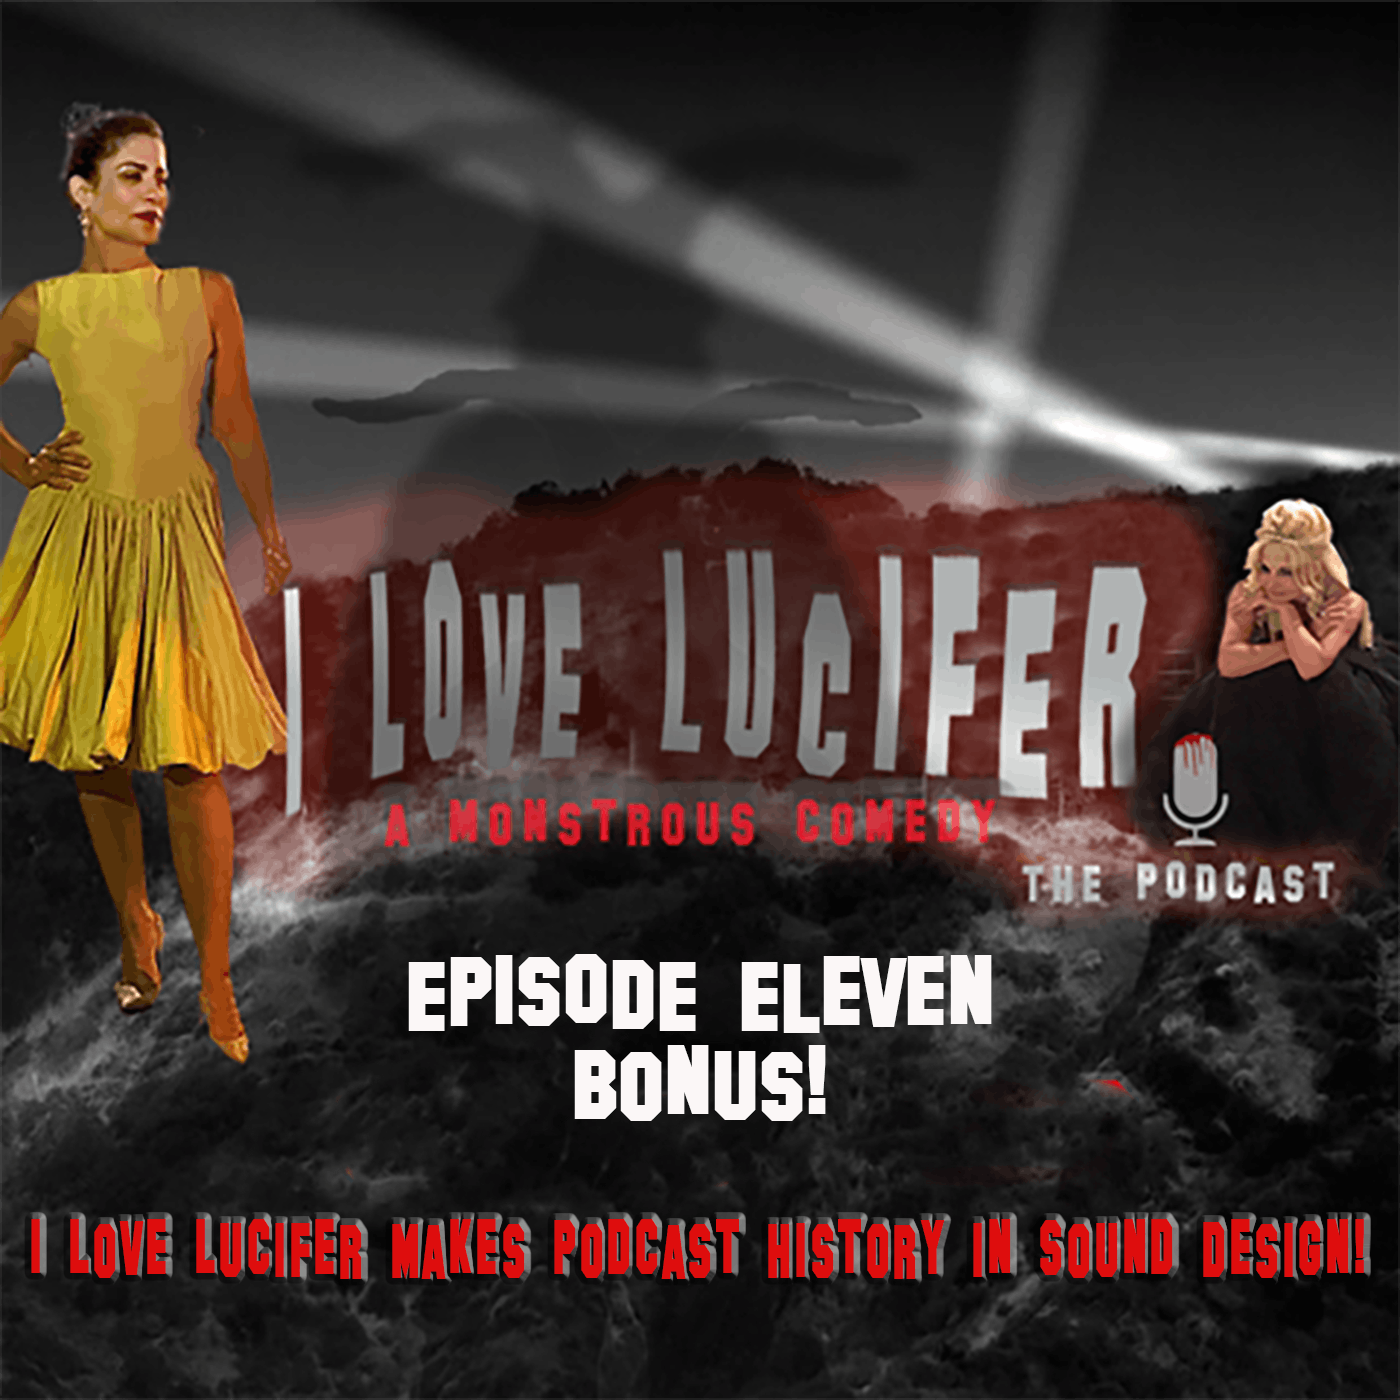 BONUS - I Love Lucifer Makes Podcast History in Sound Design!